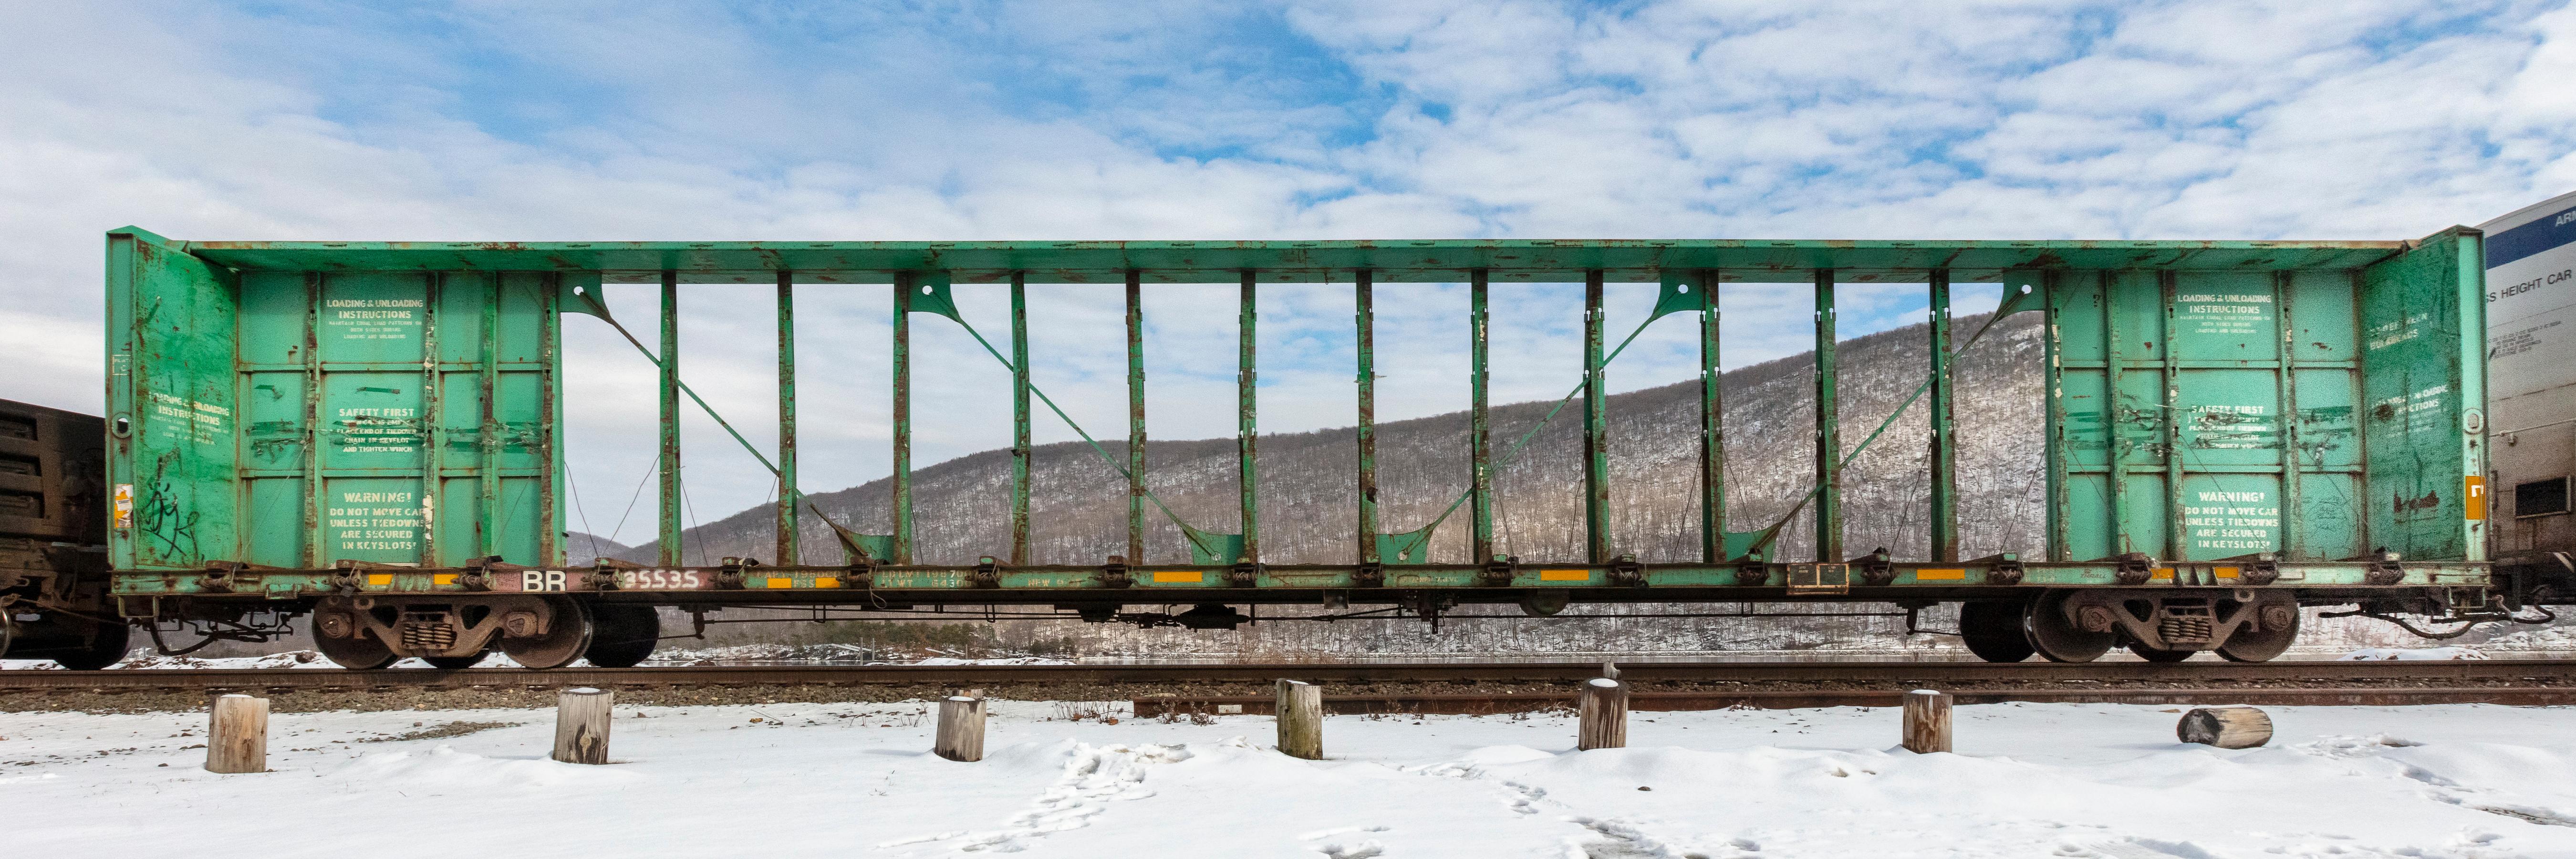 Stephen Mallon Landscape Photograph - Passing Freight -Contemporary color photograph "BR 35535" freight train series